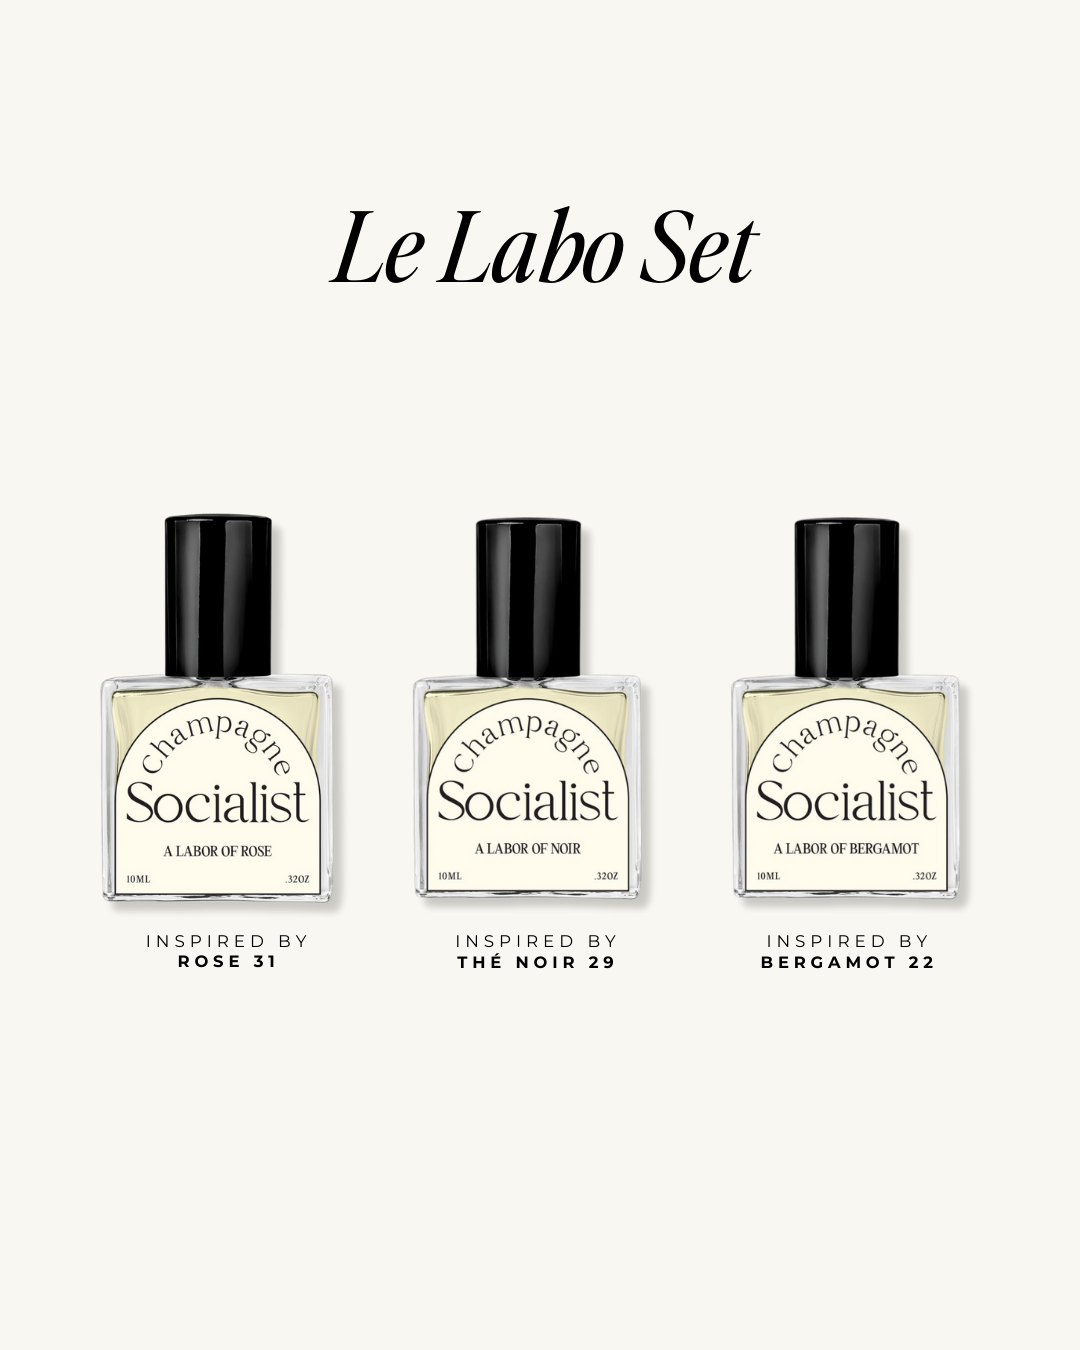 LE LABO INSPIRED PERFUME OIL SET - CHAMPAGNE SOCIALIST